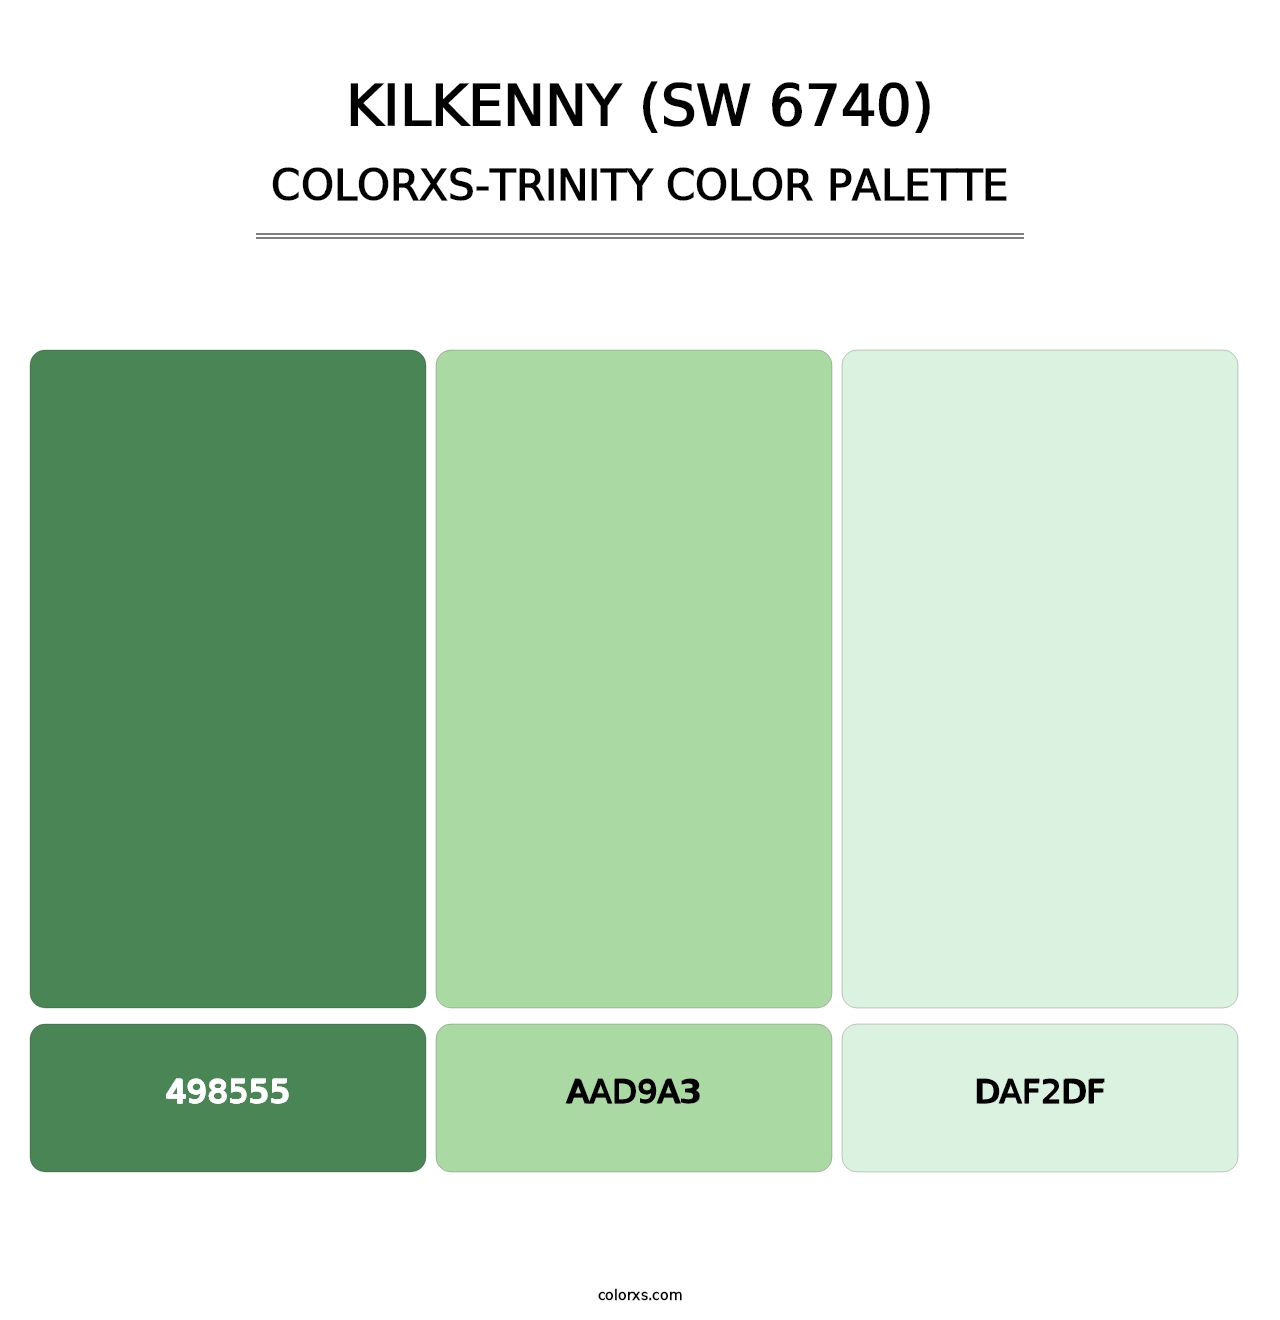 Kilkenny (SW 6740) - Colorxs Trinity Palette